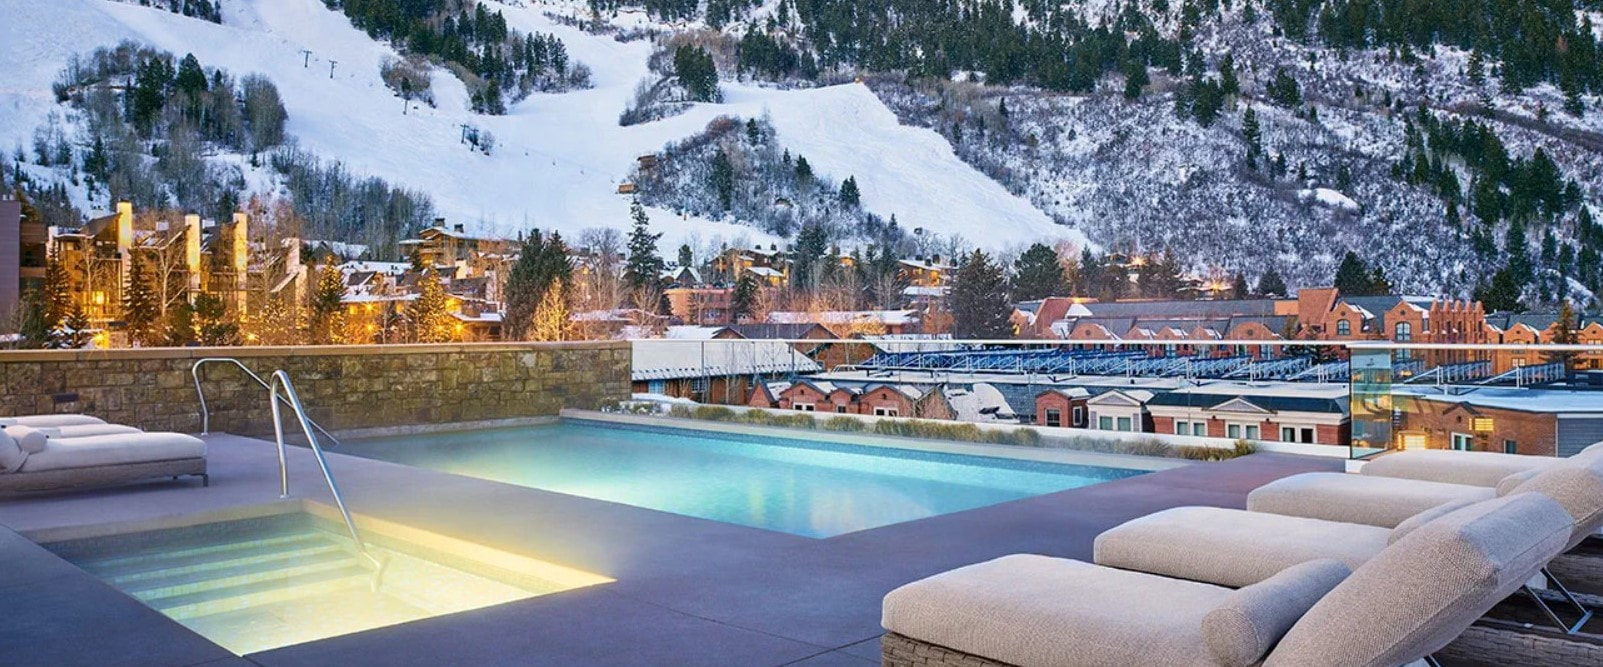 world-class hotels in Aspen